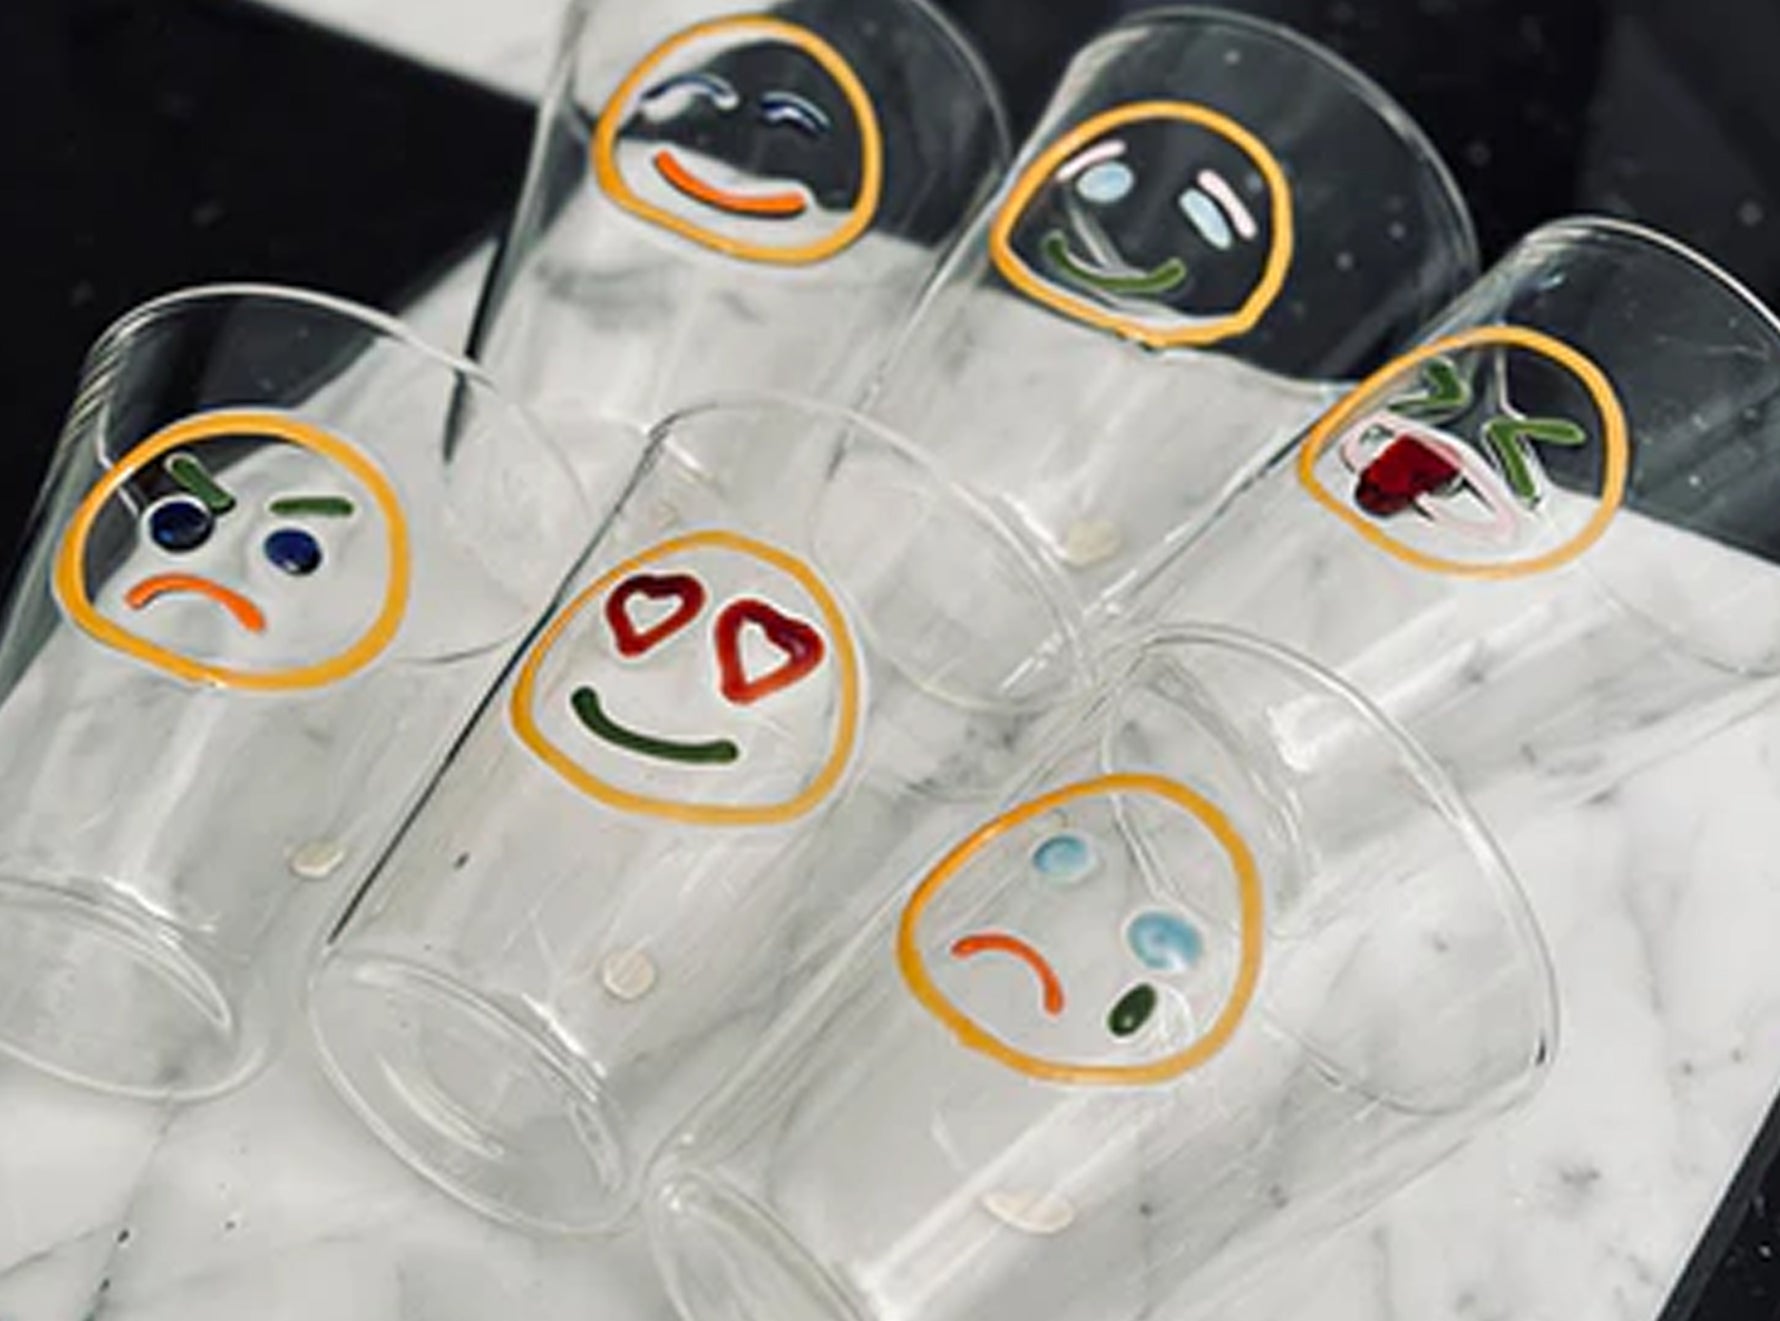 Handblown Glass 'Excited' Mood Tumbler